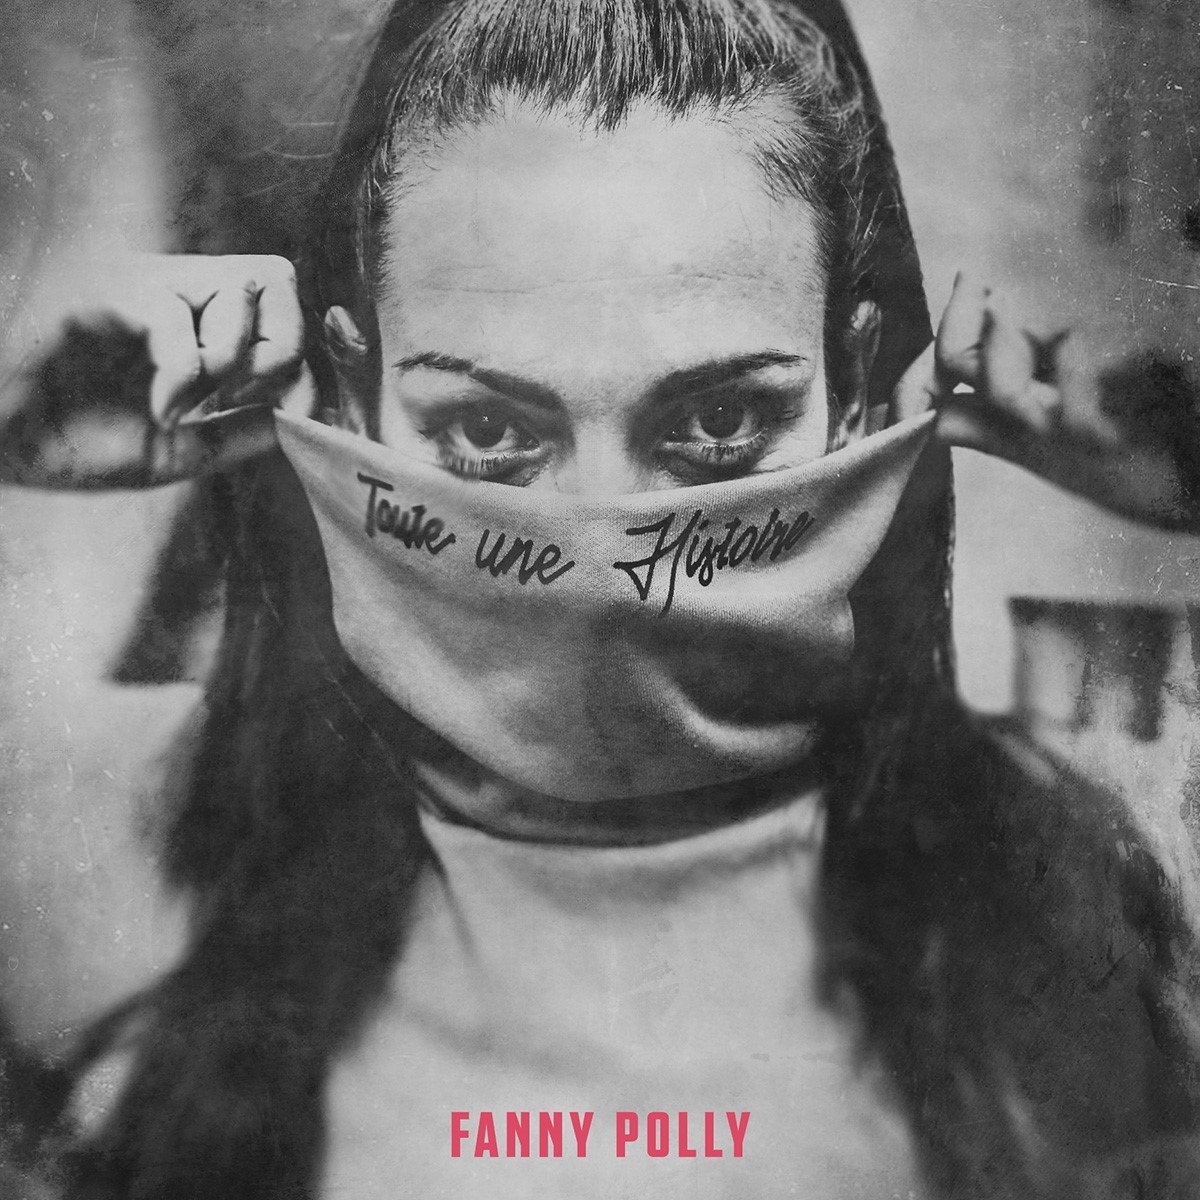 Album Cd Fanny Polly - Toute une histoire de fanny polly sur Scredboutique.com